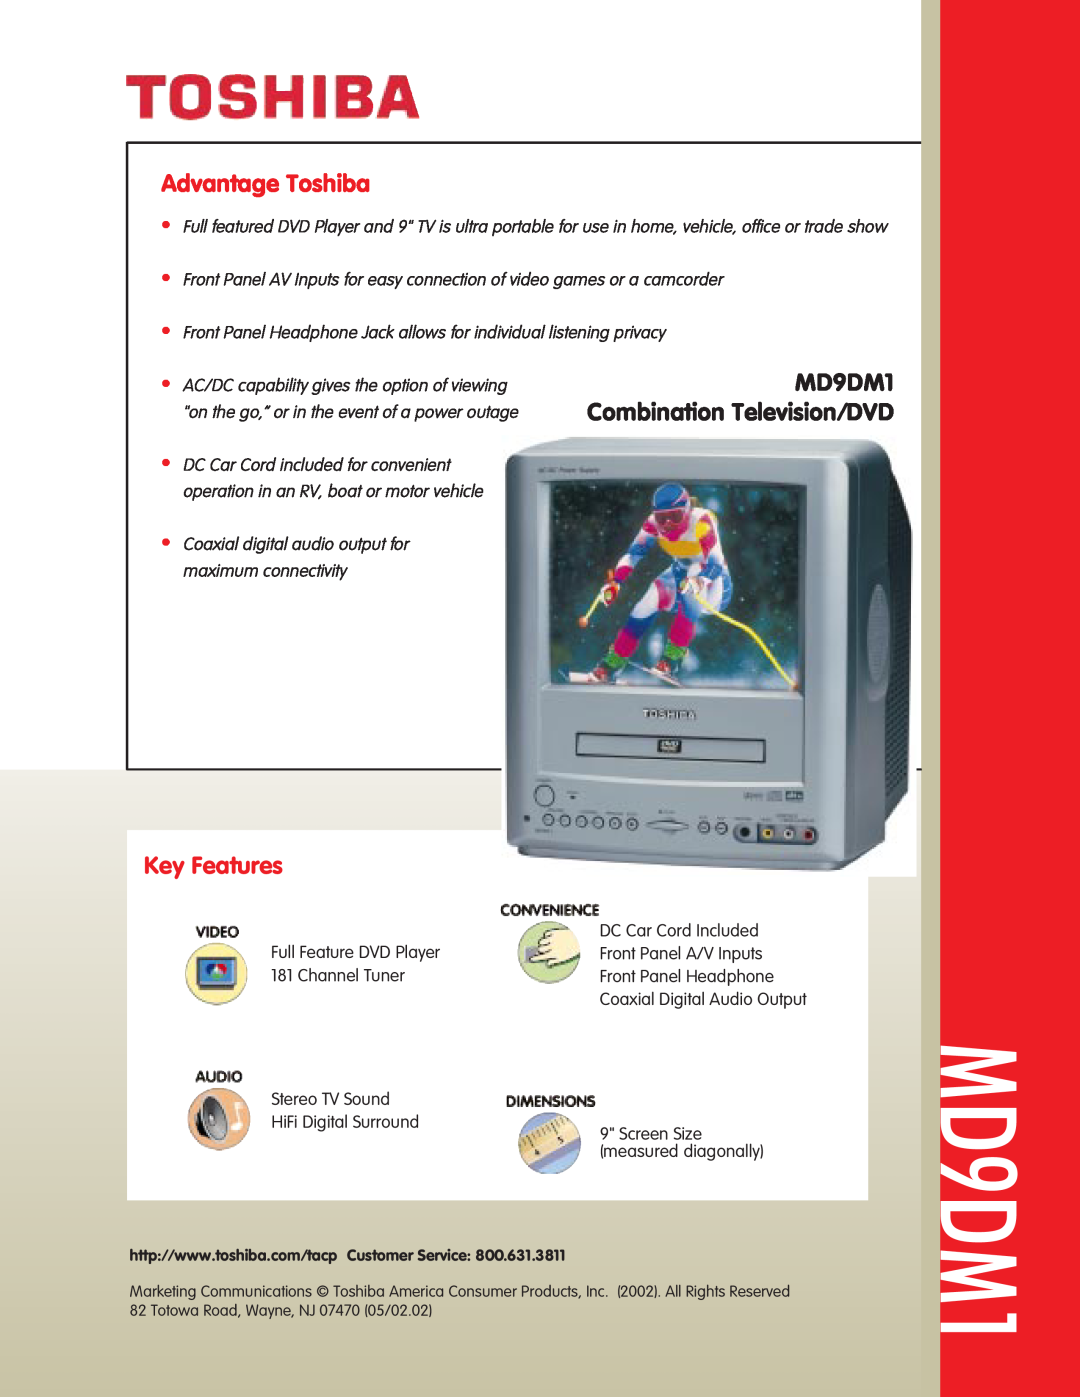 Toshiba MD 9DM1 manual Advantage Toshiba, Key Features, MD9DM1 Combination Television/DVD 